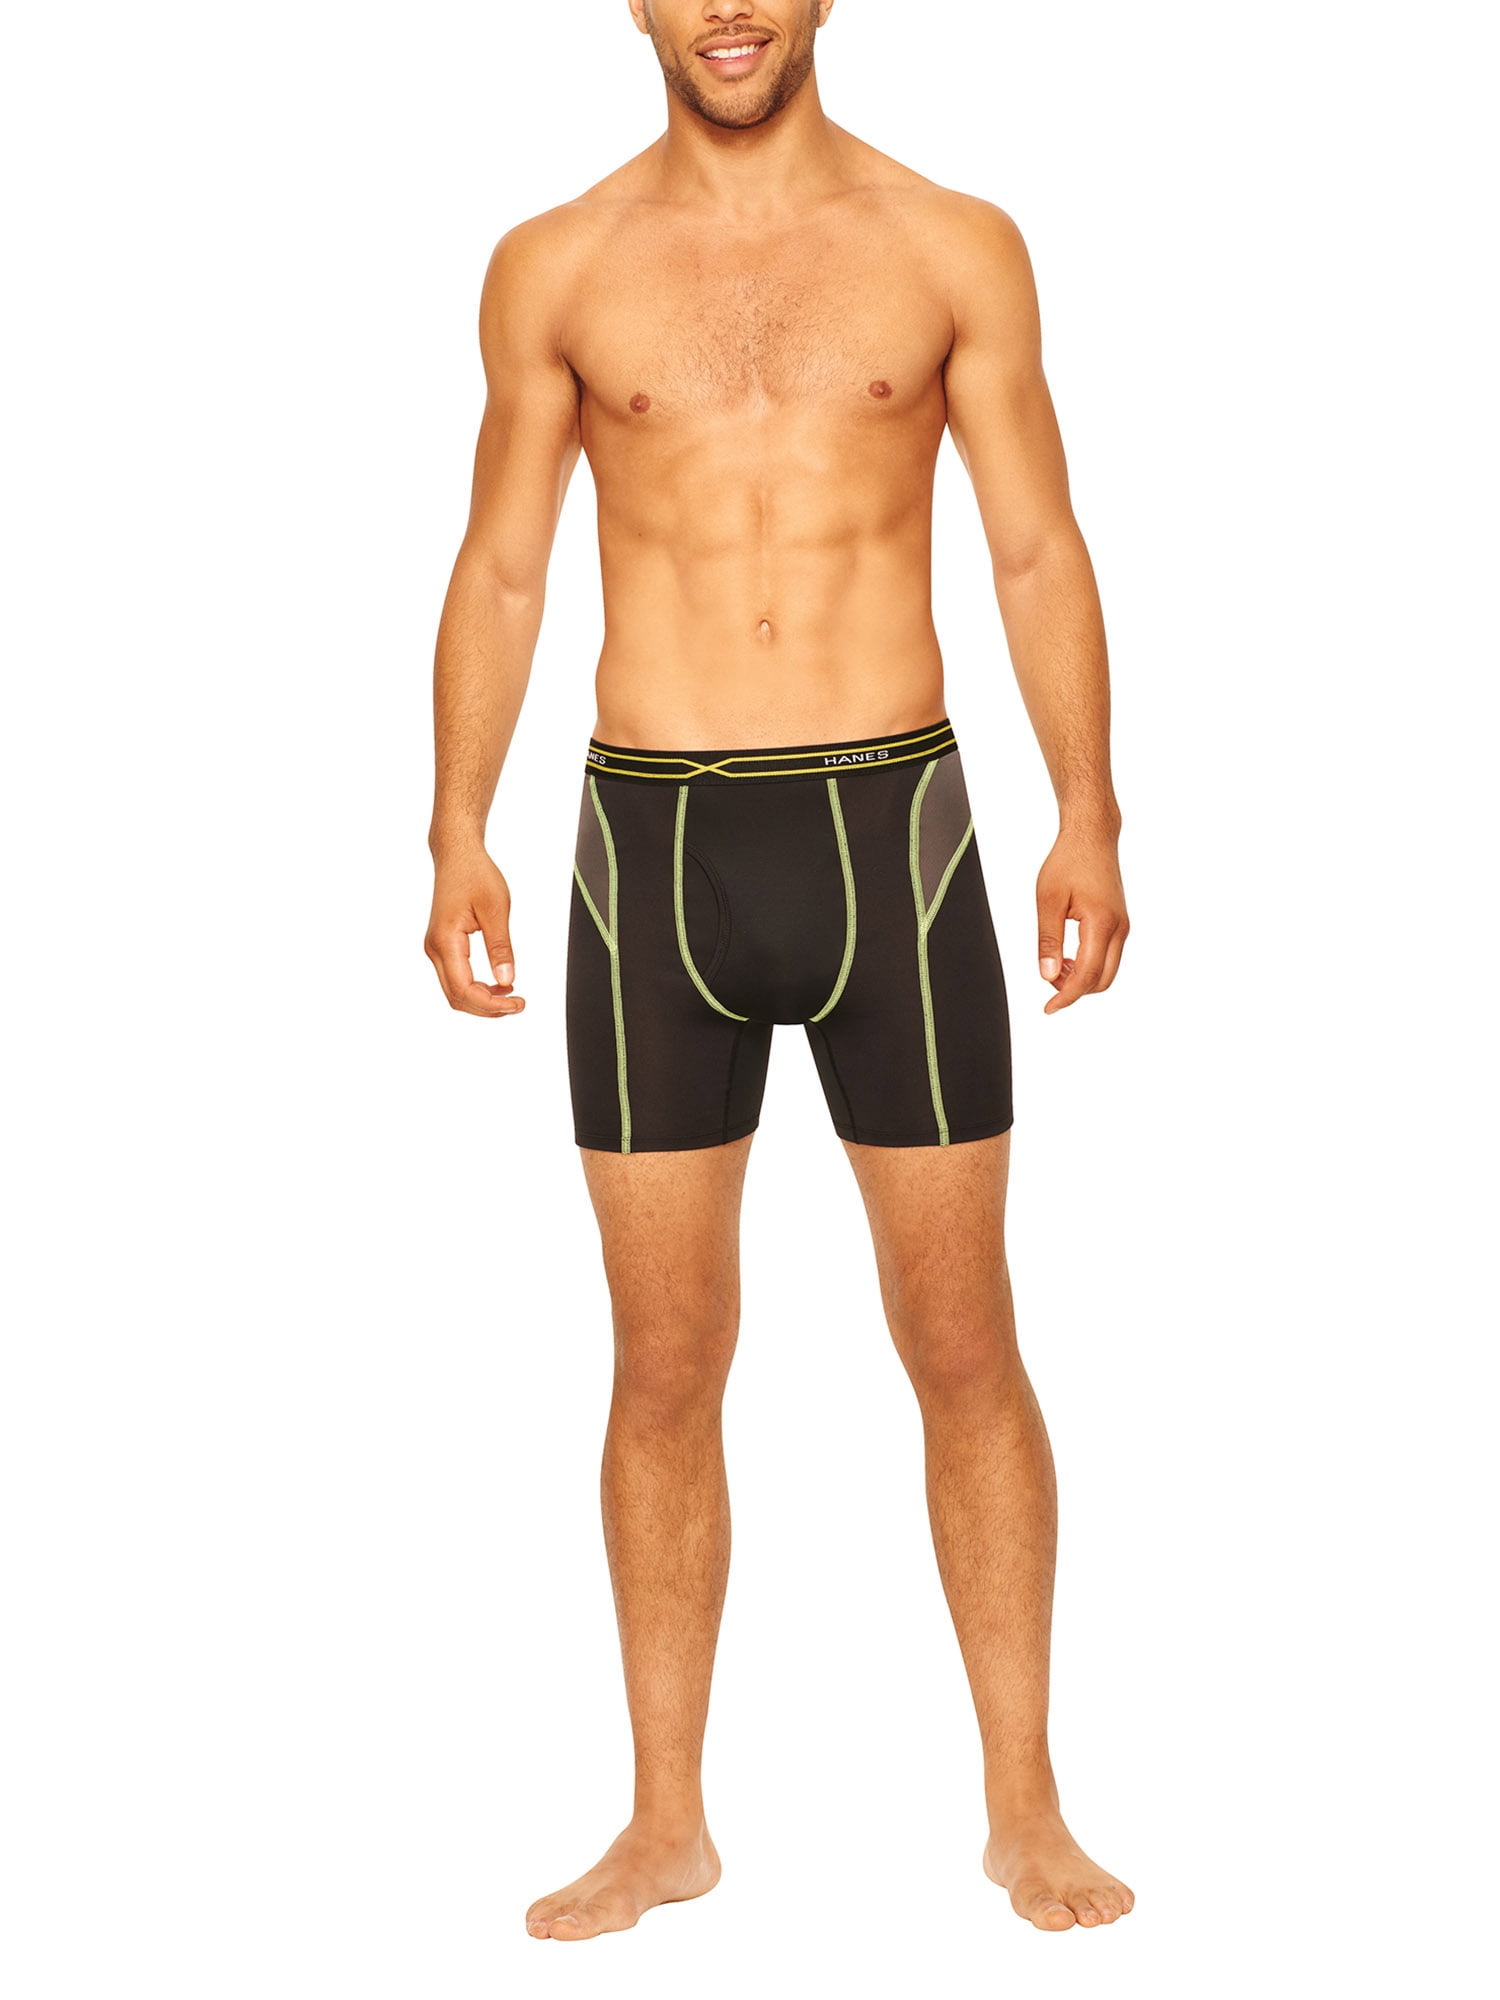 Hanes Men's 3-pack Active Cool X-temp Long Leg Boxer Assorted Size X-large U4y for sale online